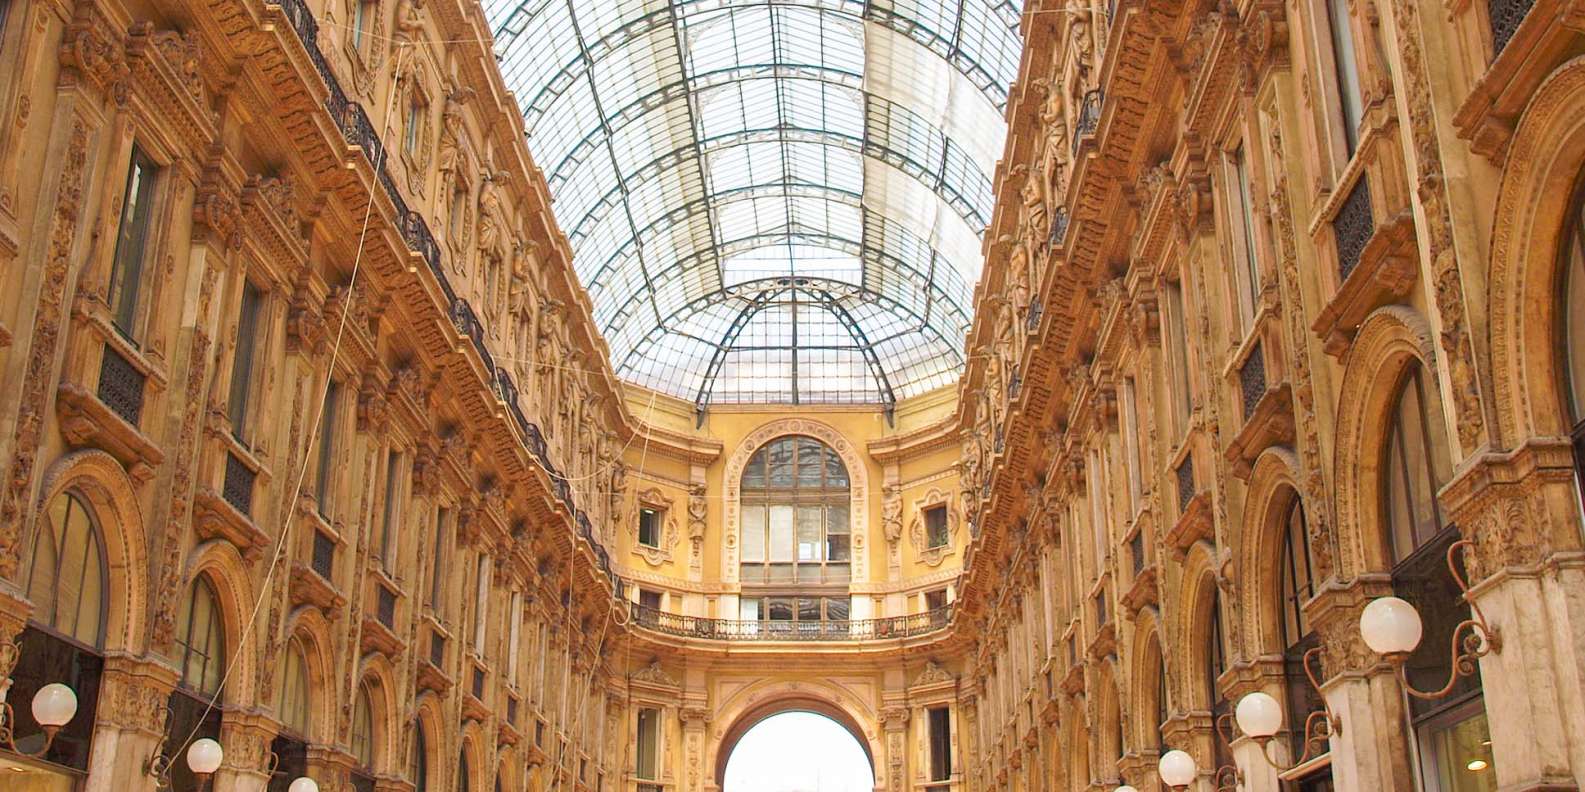 A Guide To Galleria Vittorio Emanuele II, Milan